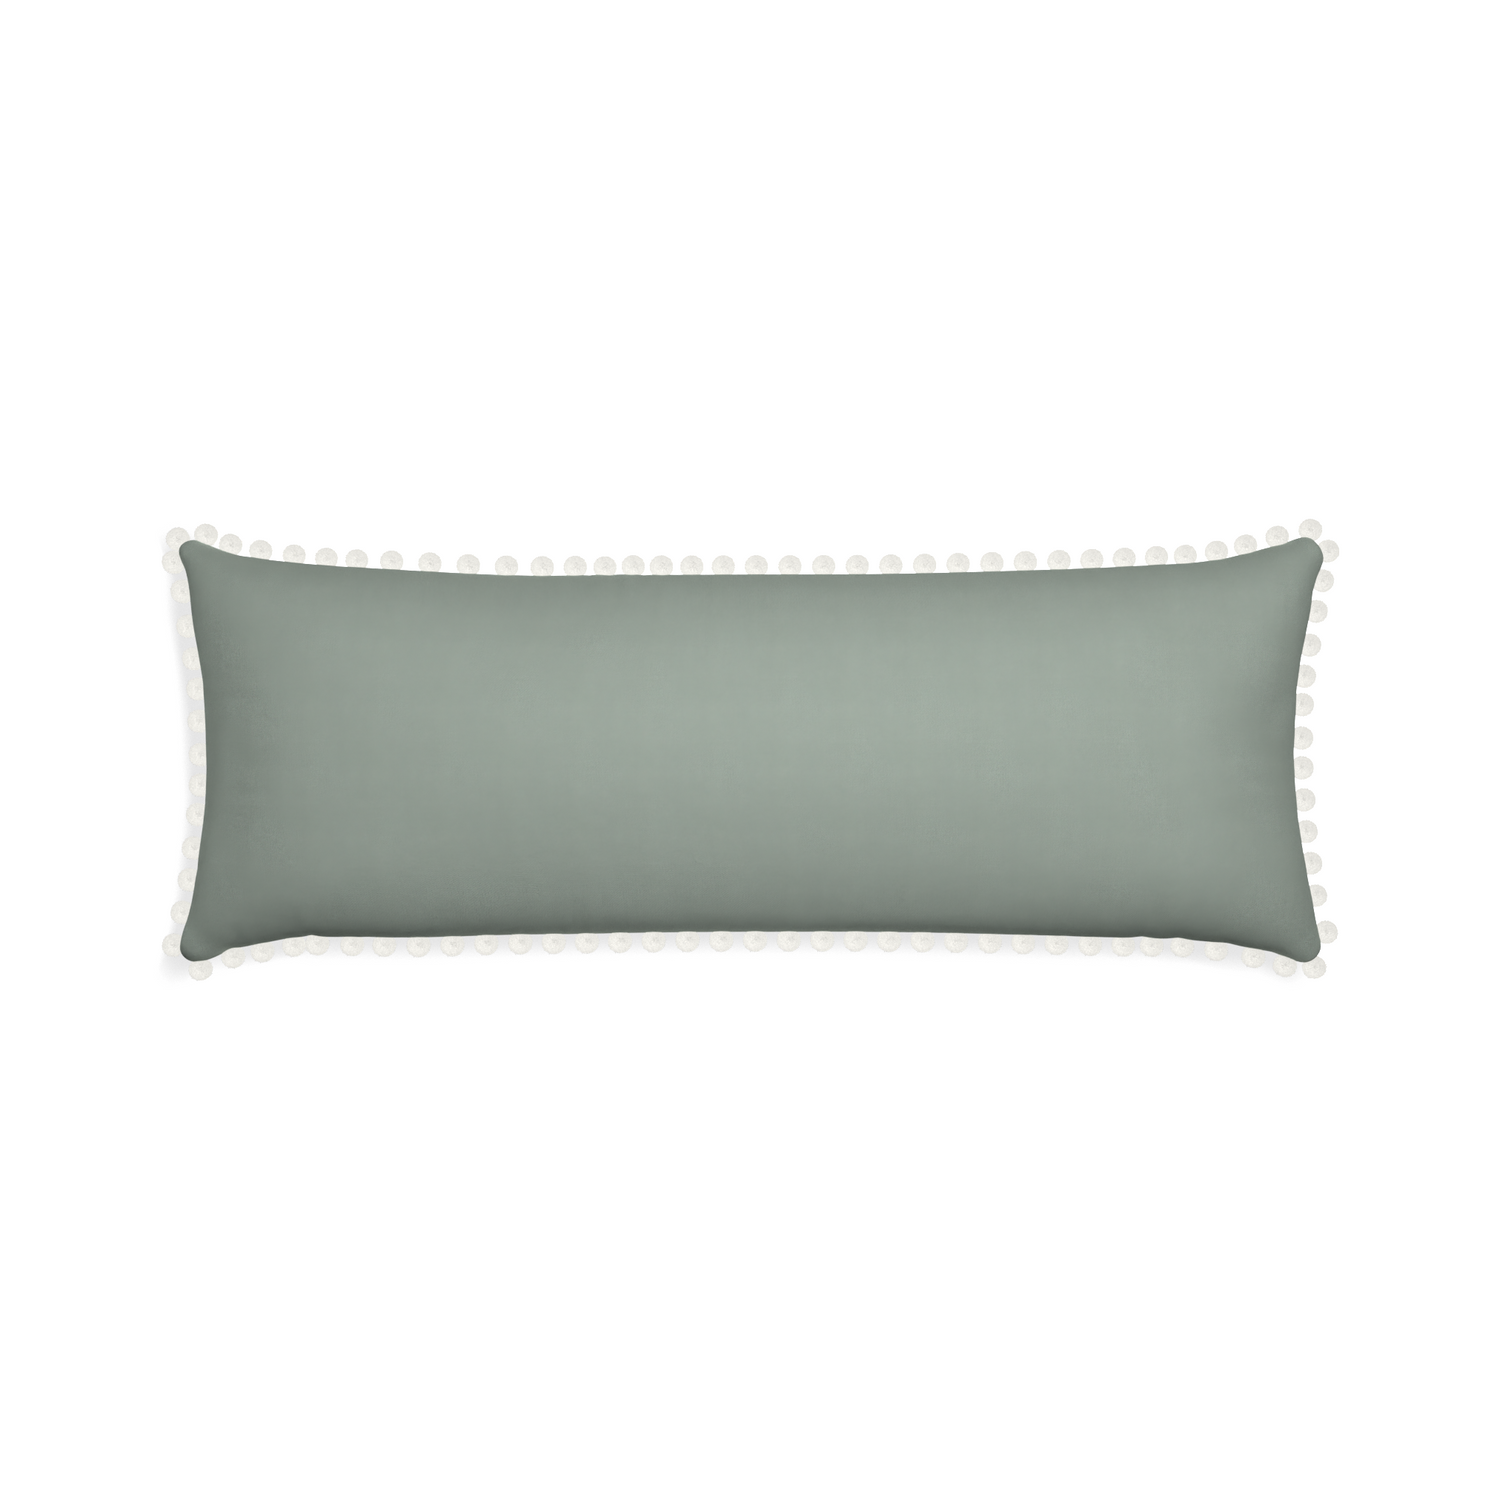 Xl-lumbar sage custom pillow with snow pom pom on white background